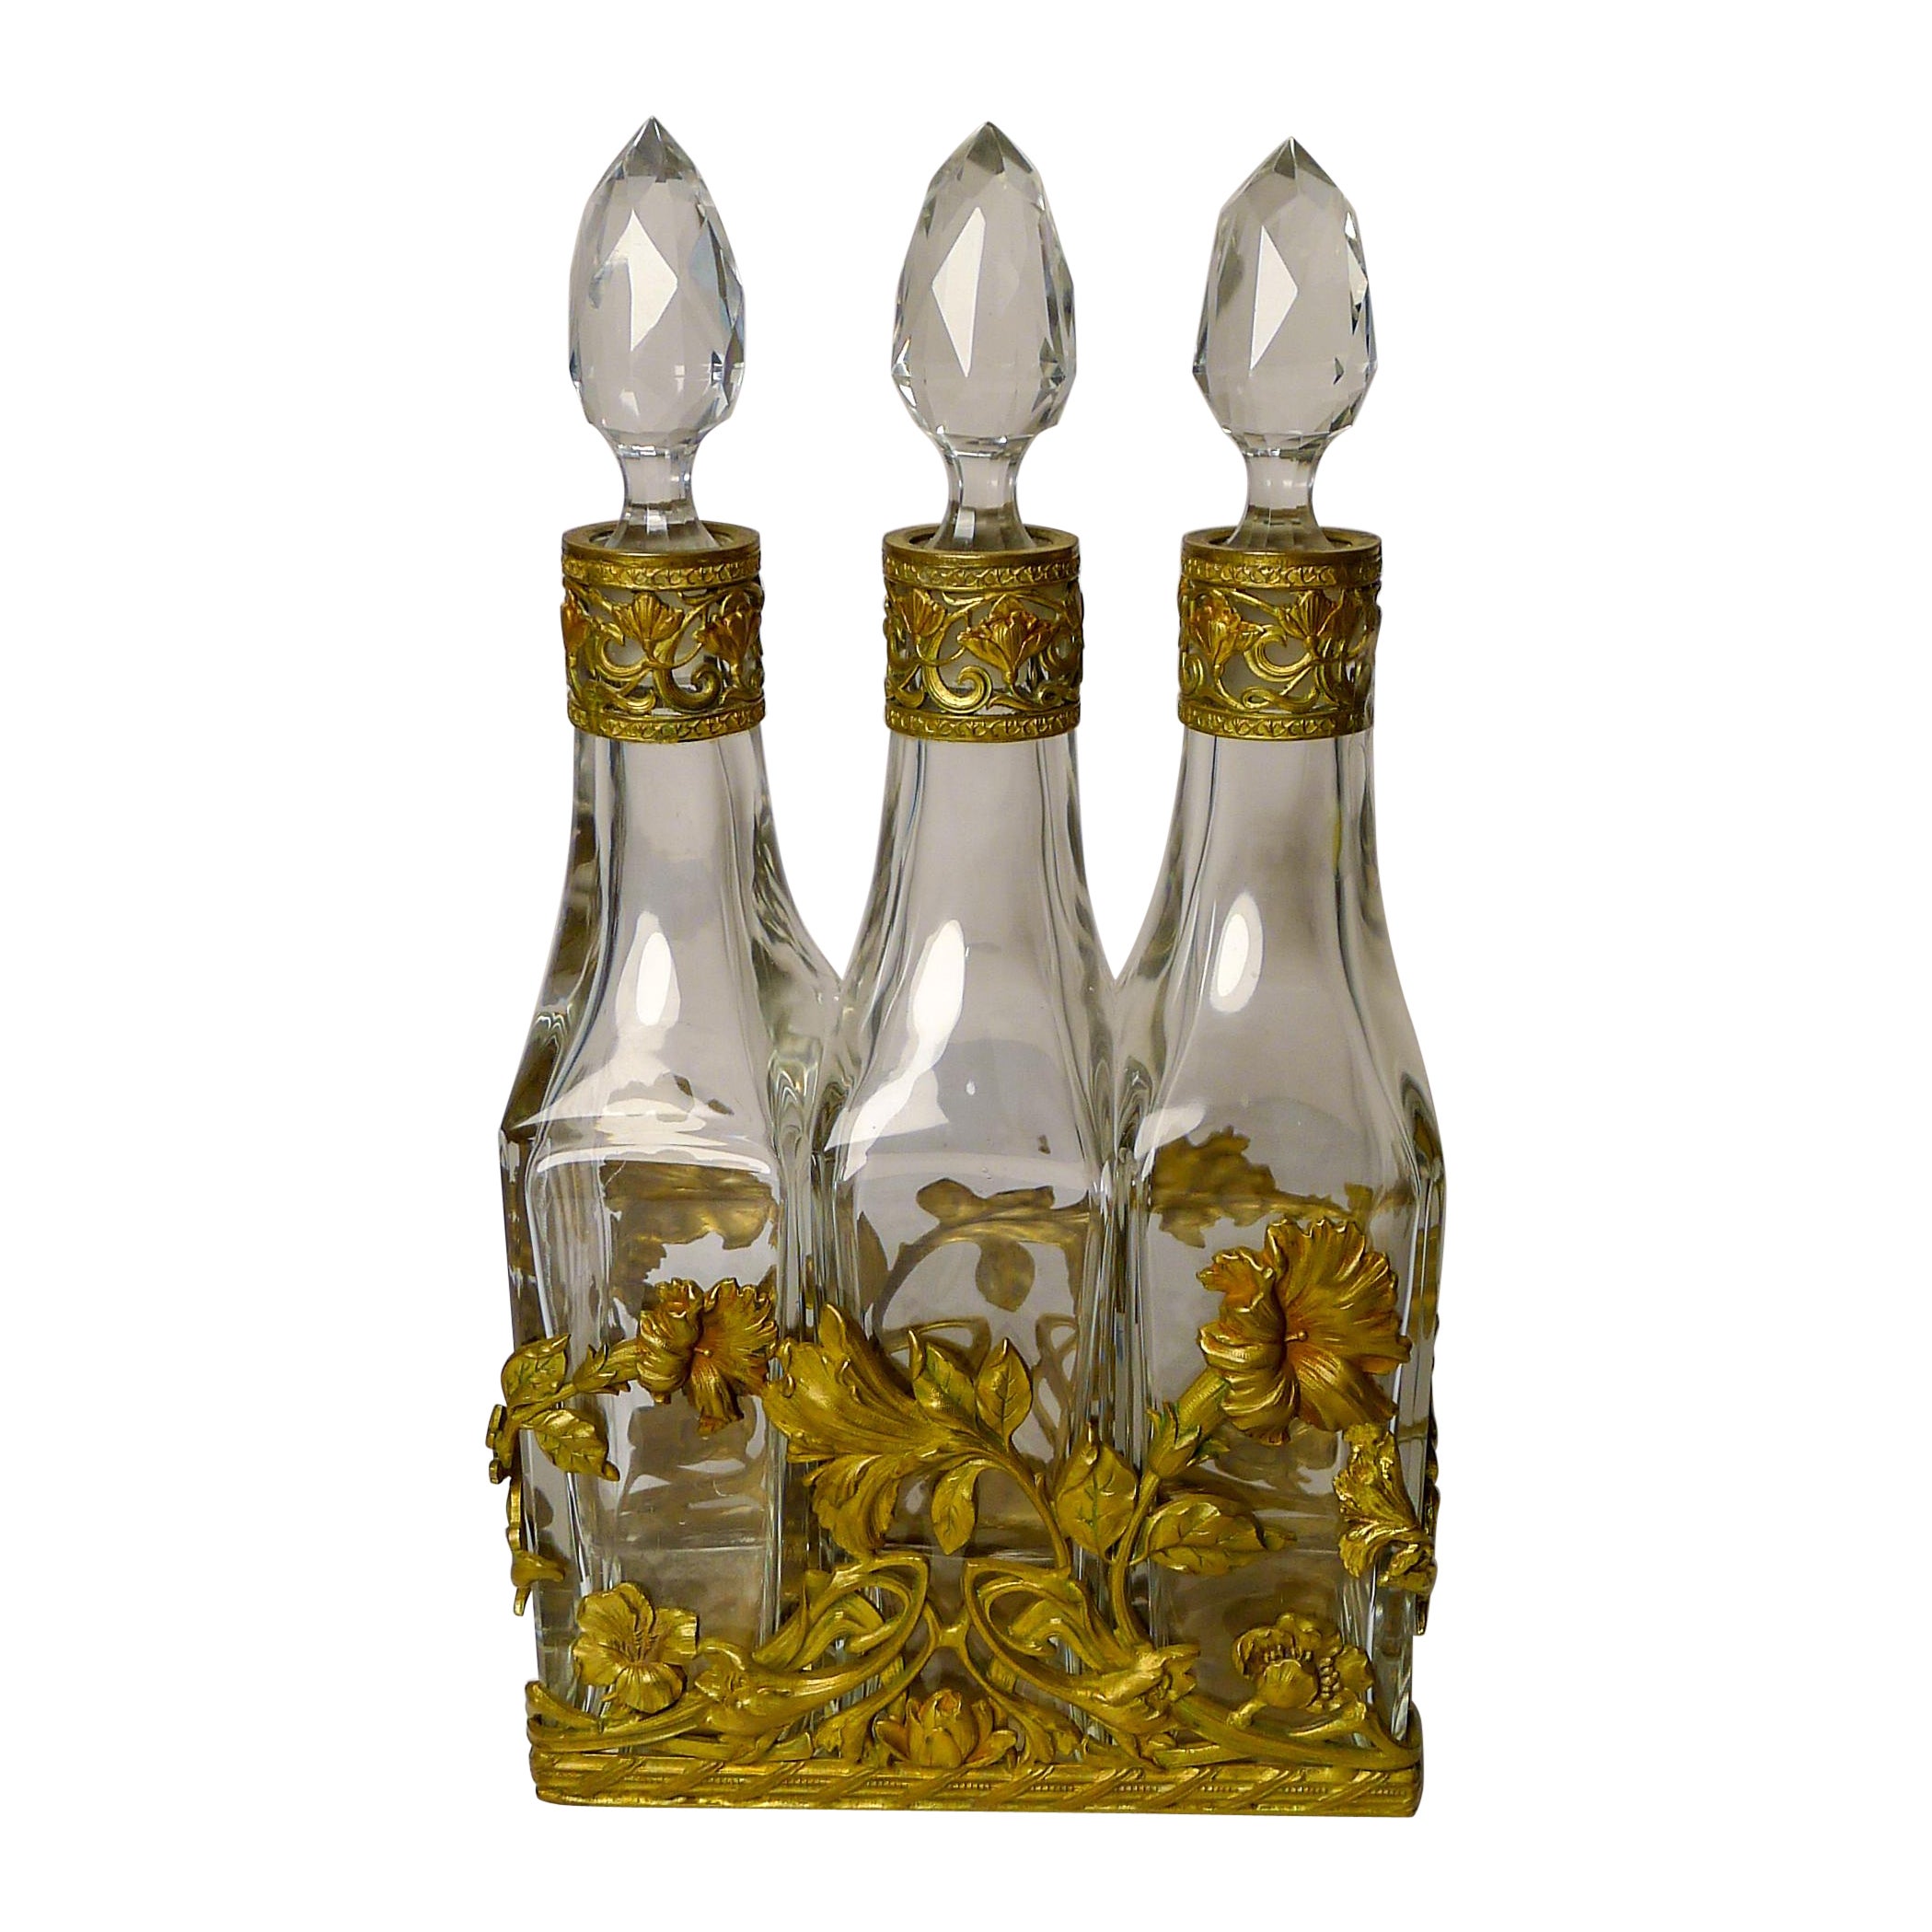 French Art Nouveau Liquor Decanter Set / Perfume Caddy c.1900